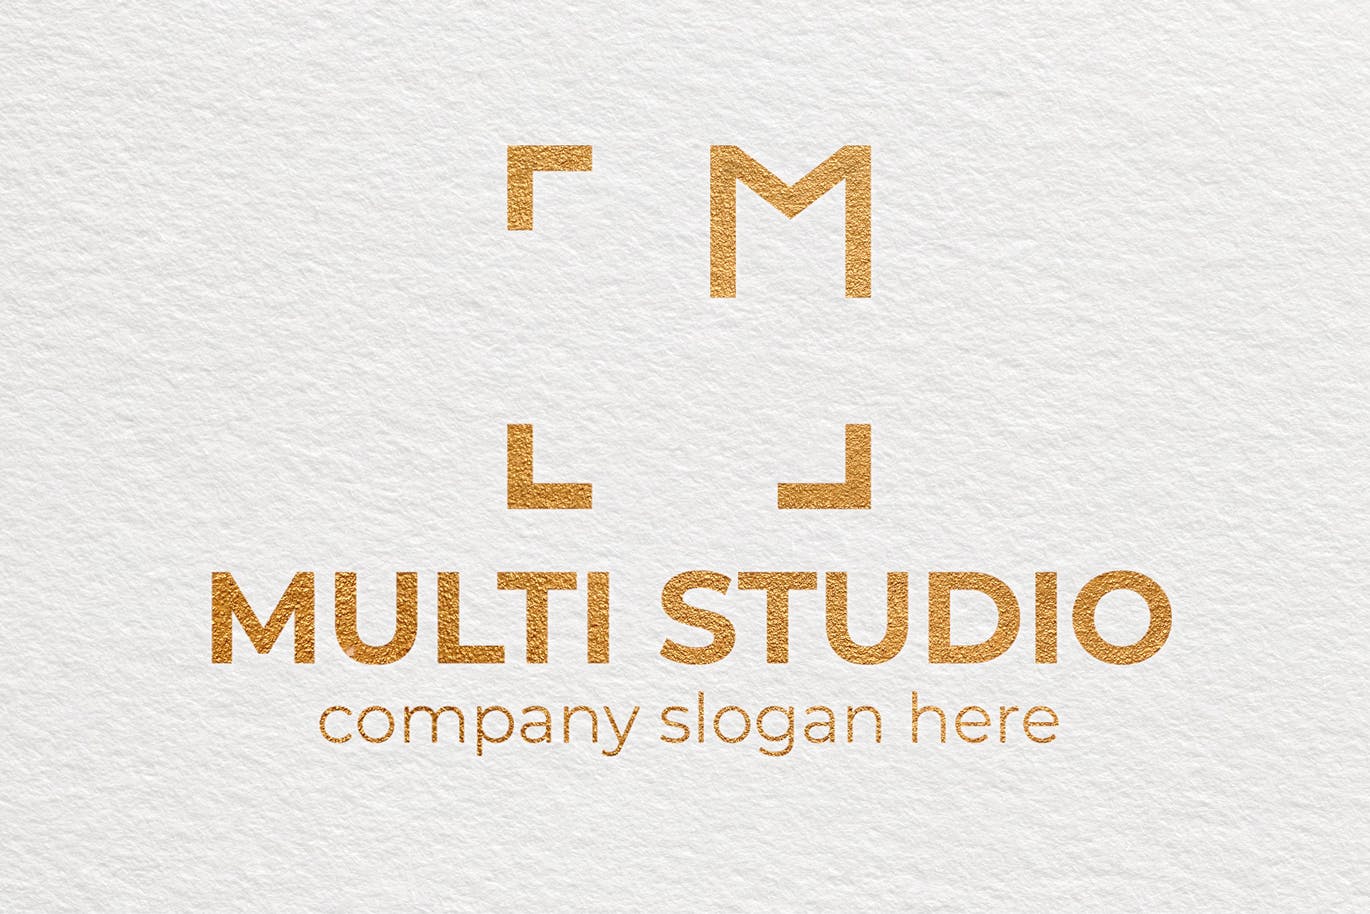 字母M创意图形企业品牌Logo设计第一素材精选模板 Letter Based Business Logo Template插图(3)